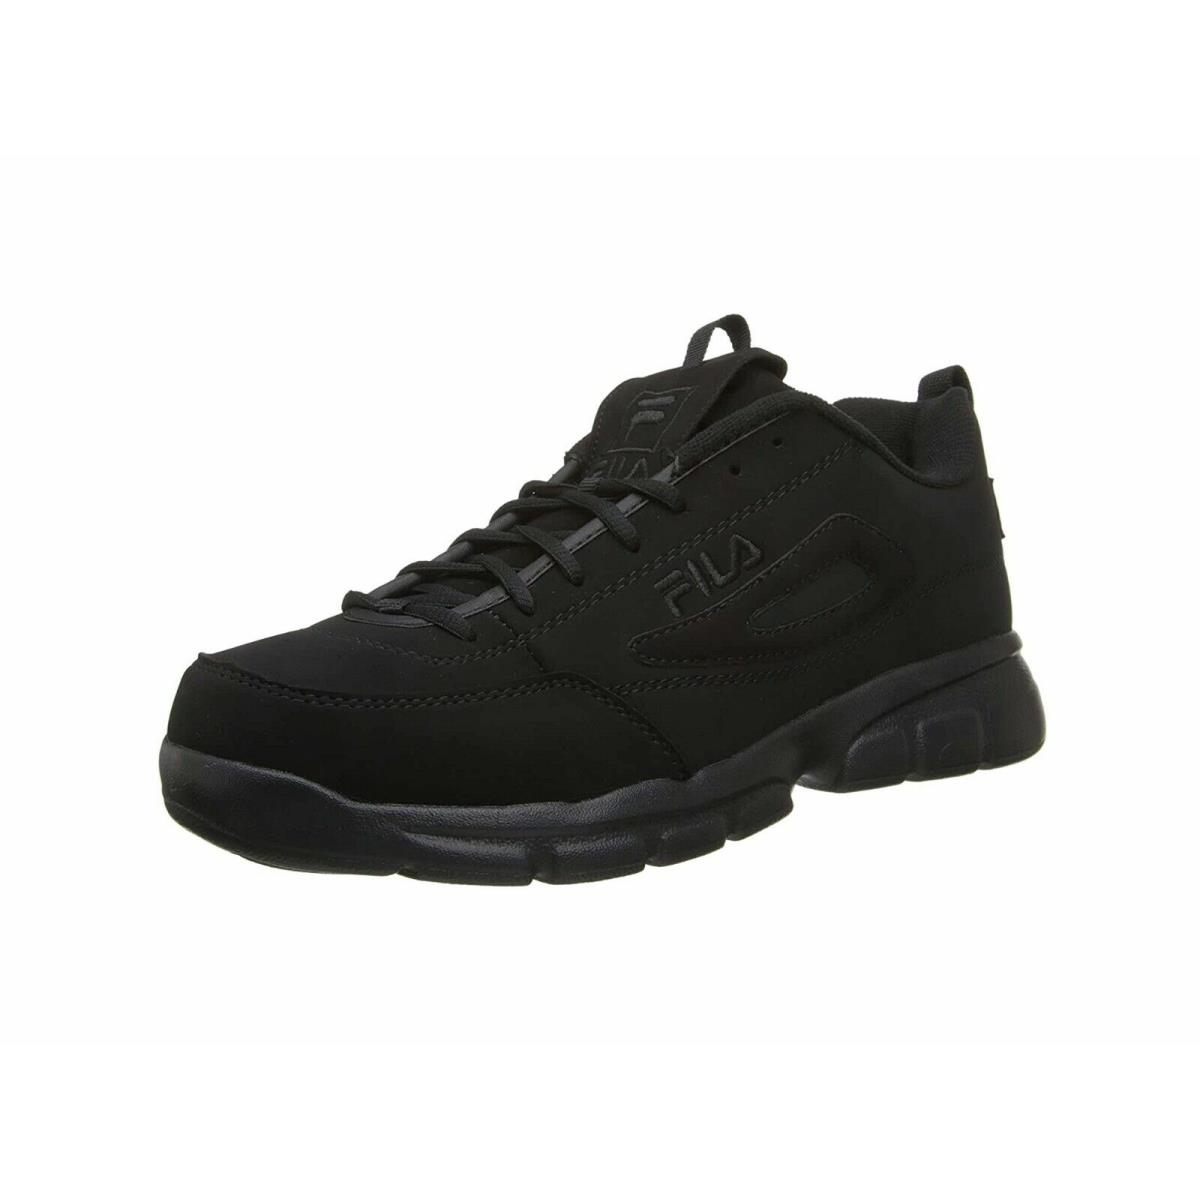 Fila Disruptor SE Men Shoes Nubuck Black Black Sneakers